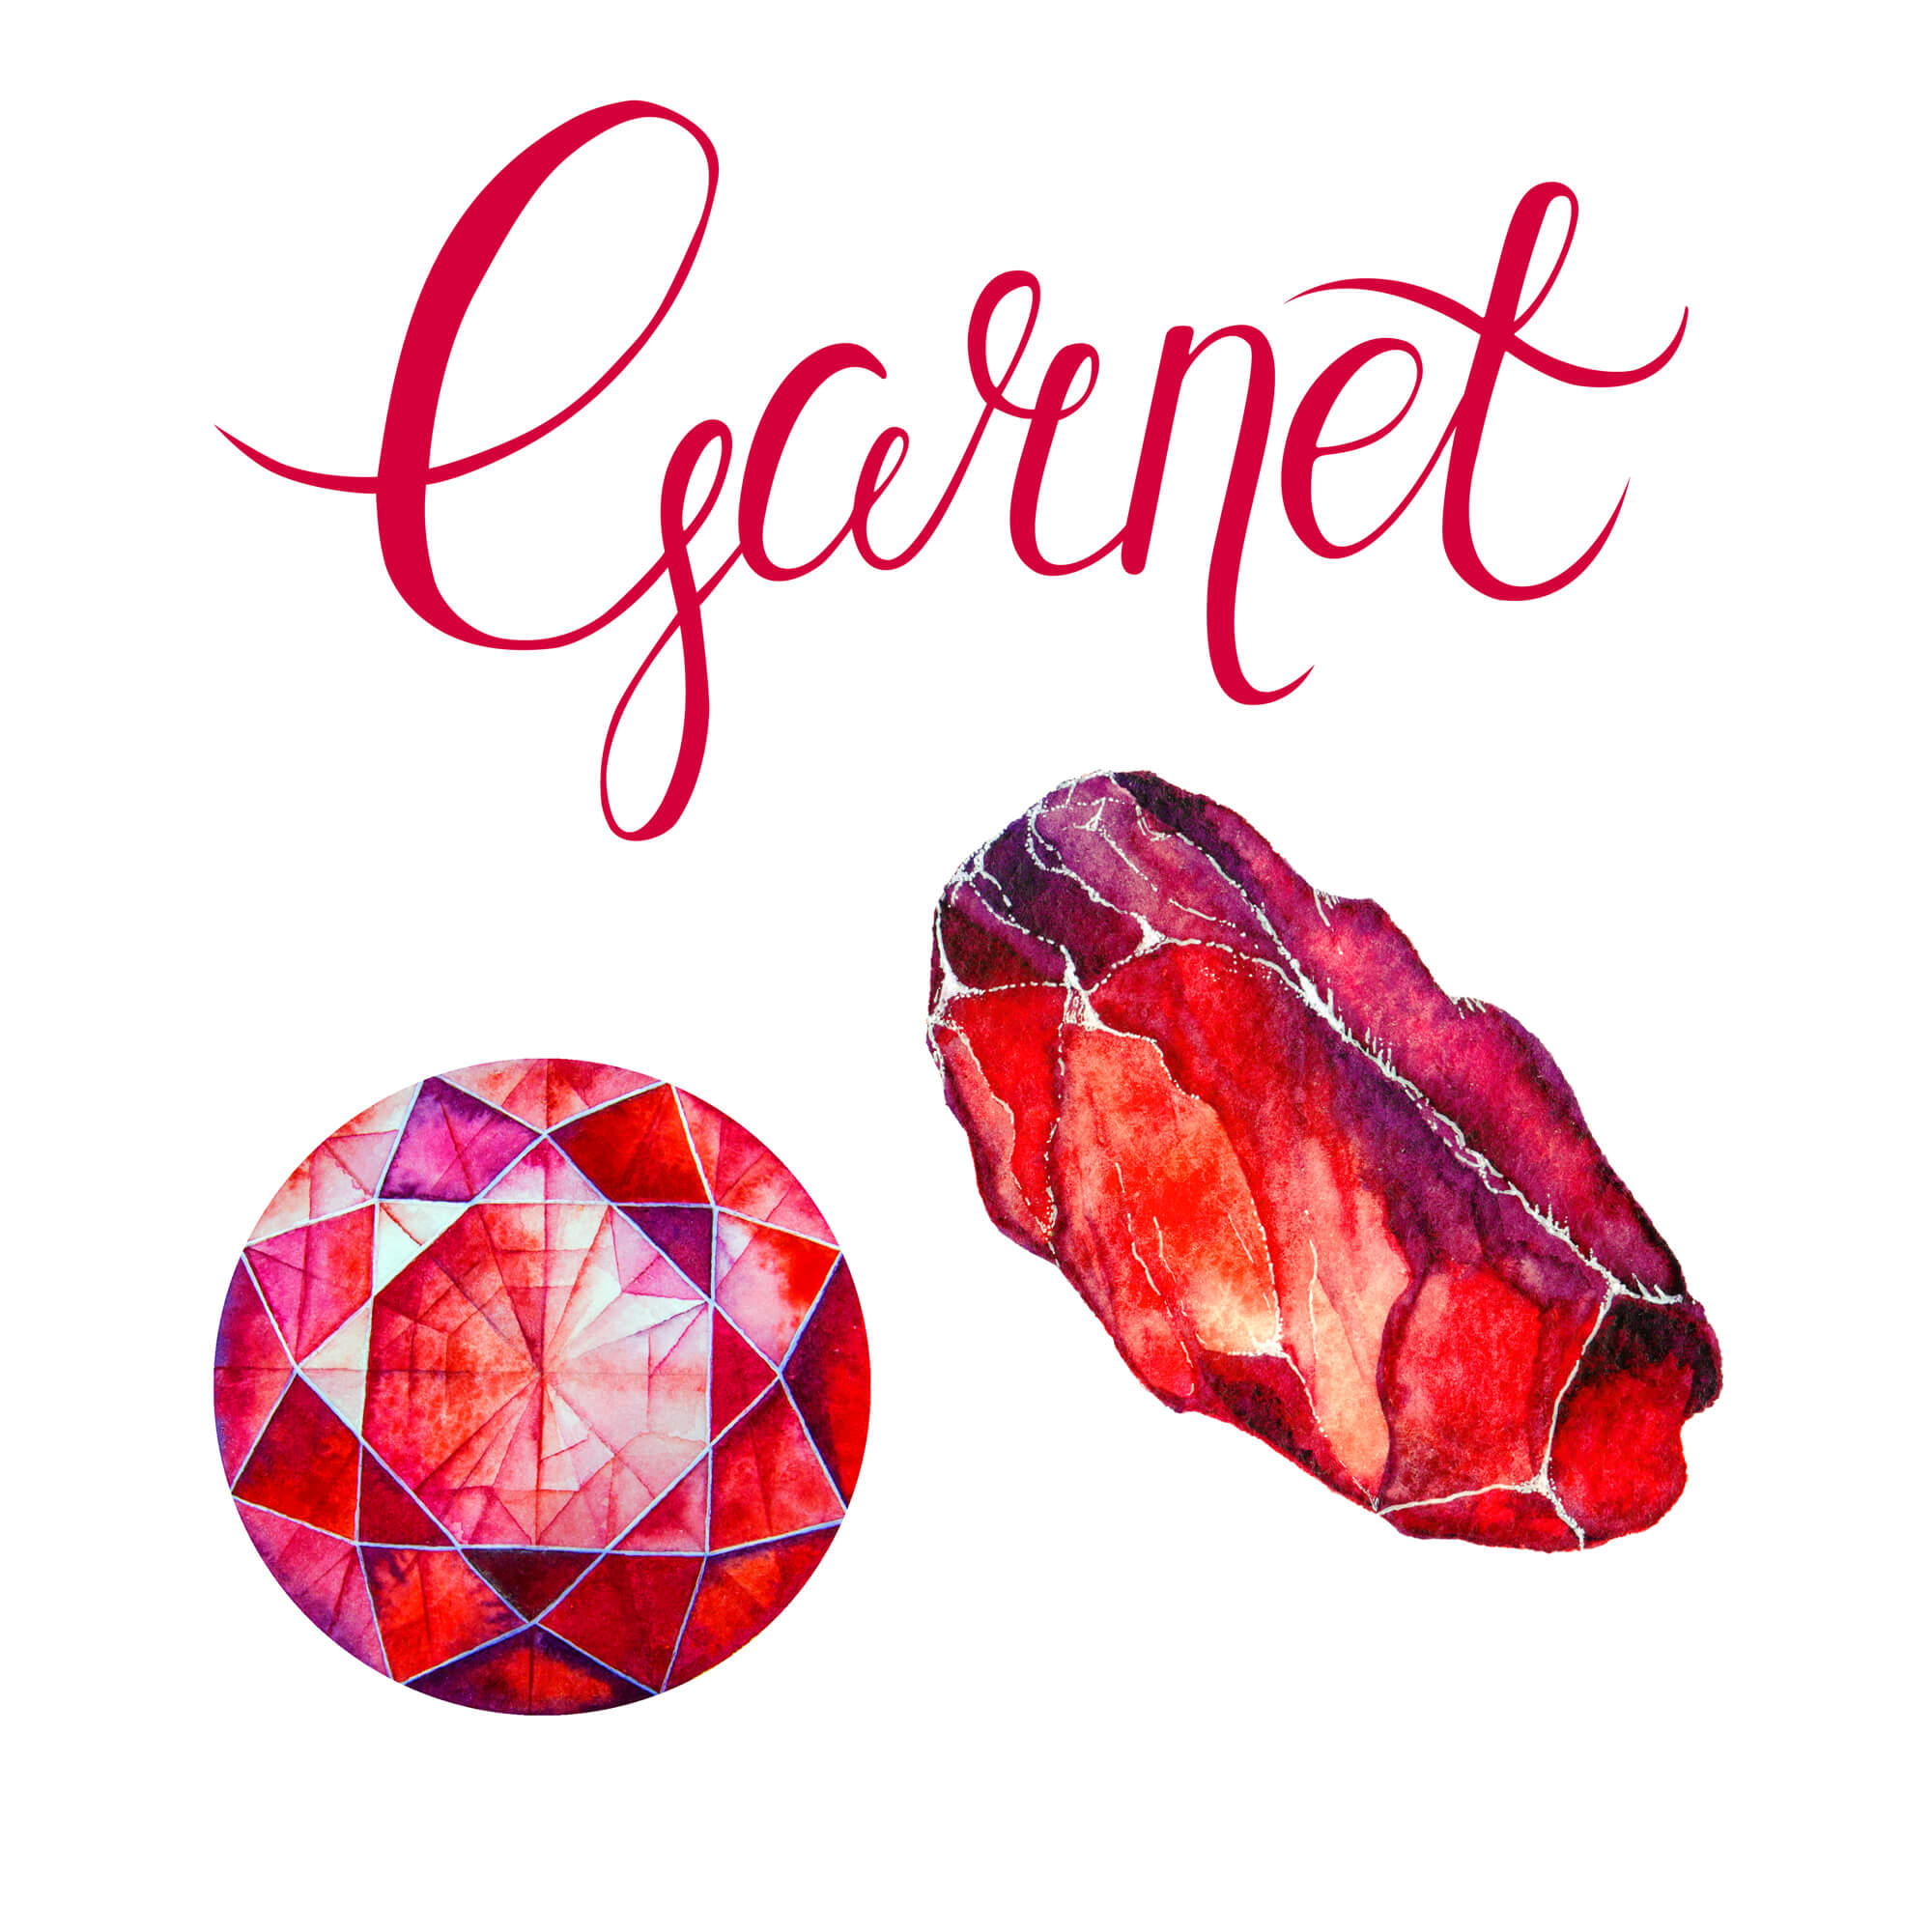 Garnet Birthstone